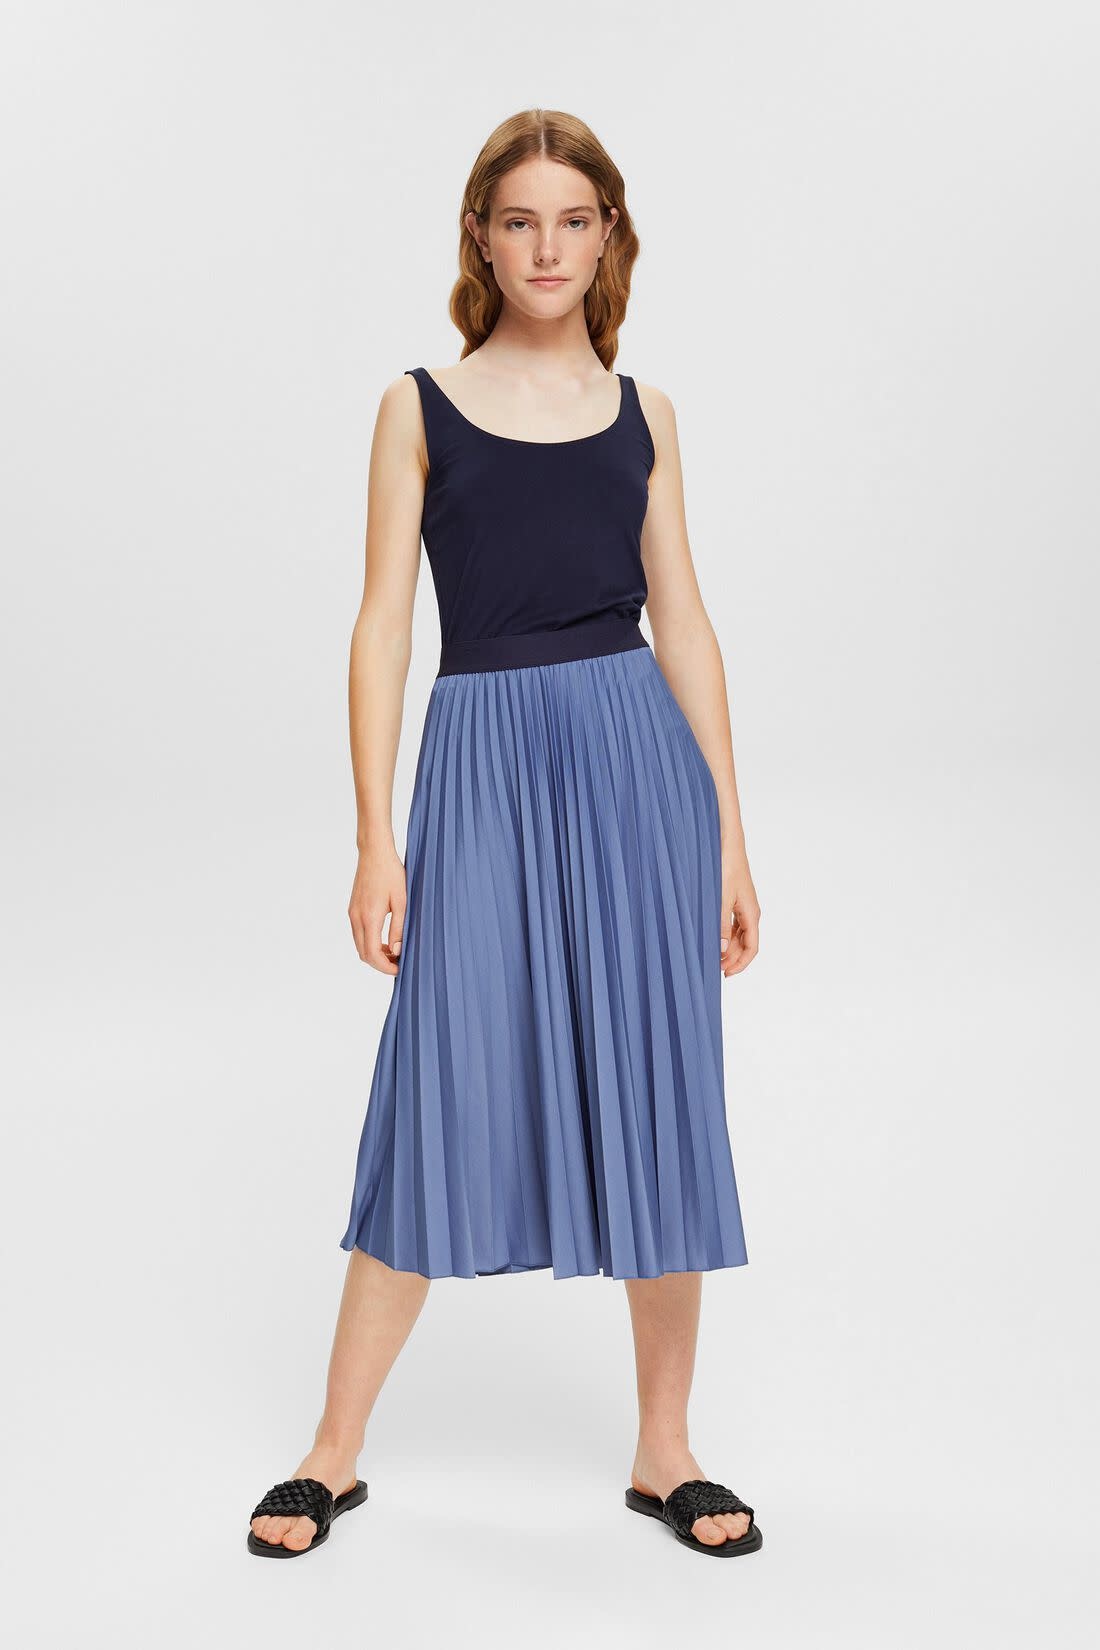 Plisse Skirt - Dusty Blue